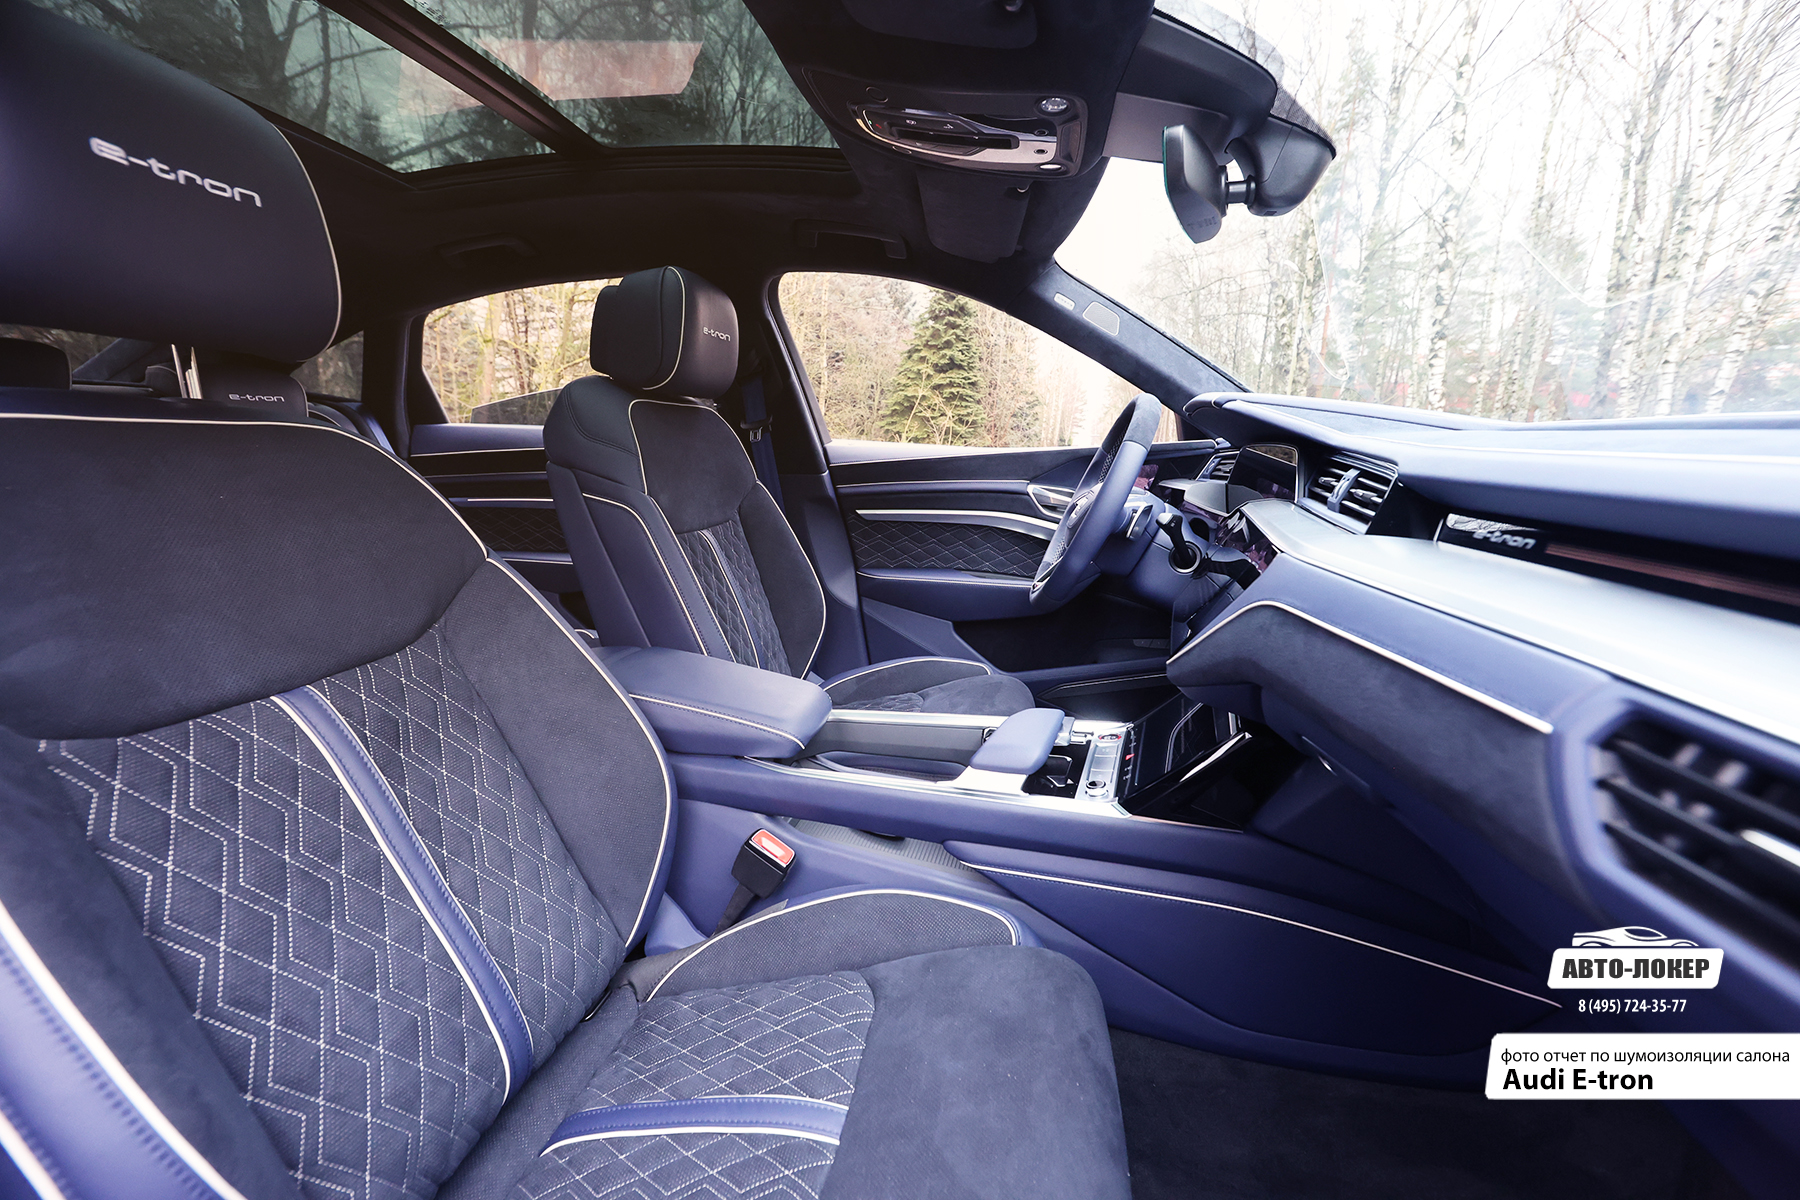 Перетяжка передних сидений салона Audi E-tron в натуральную кожу